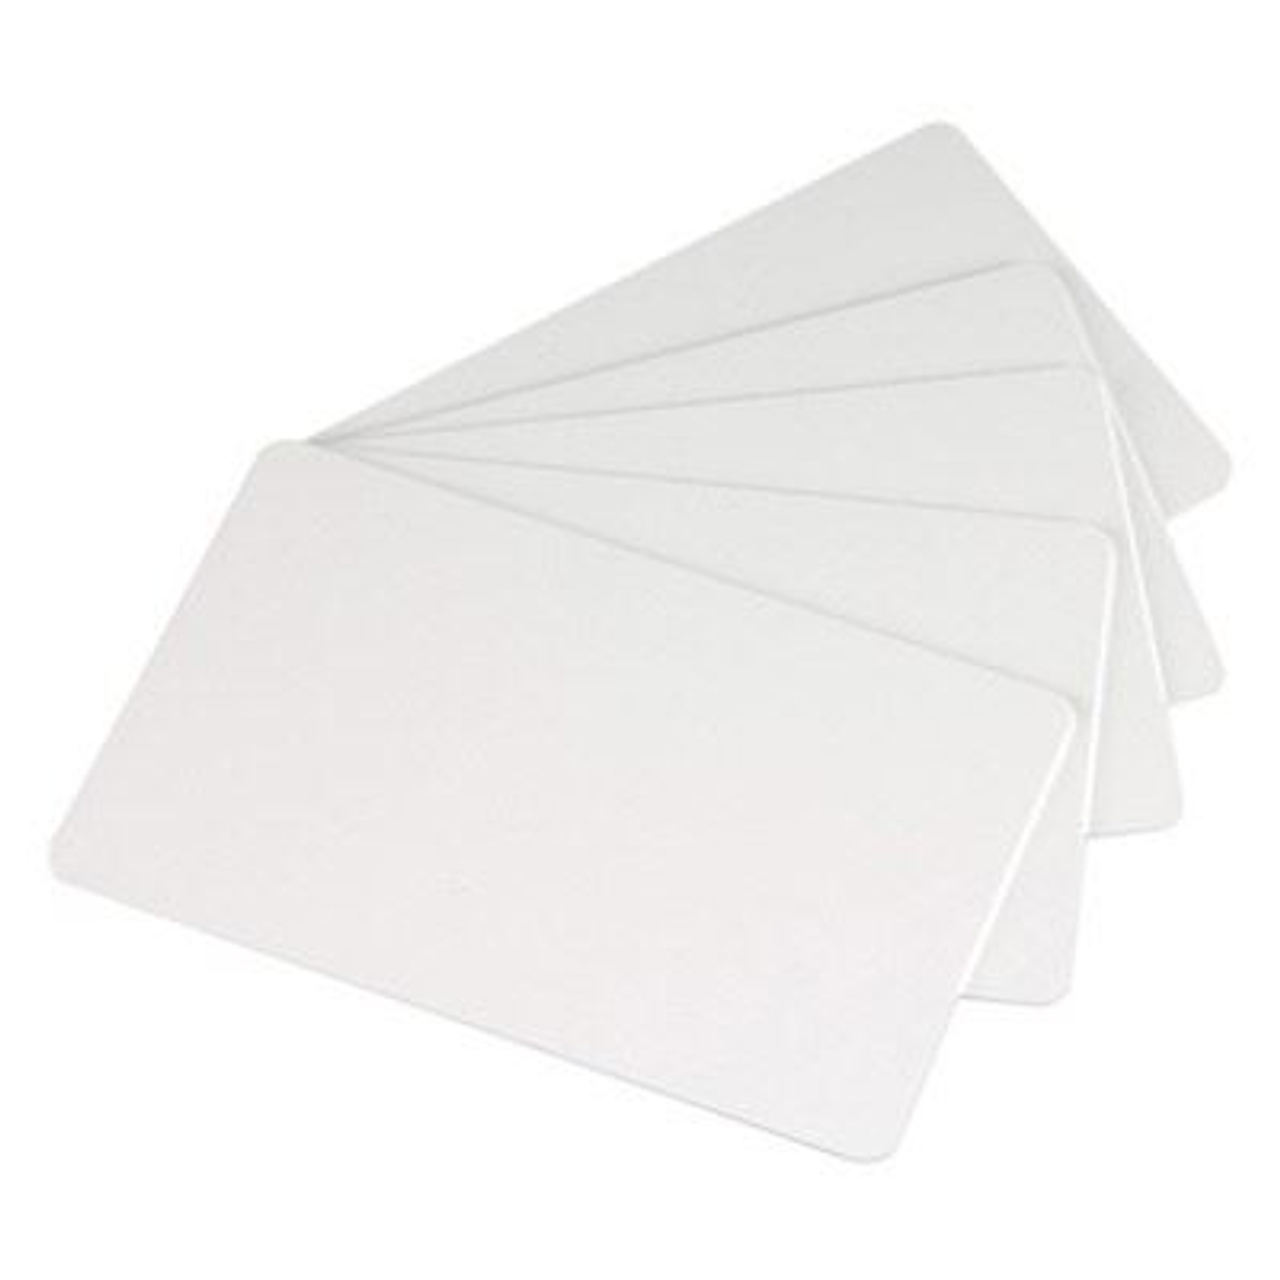 Tyvek White ID Card/Badge Sleeves 2.25 x 3.5 inch - 500 Pack